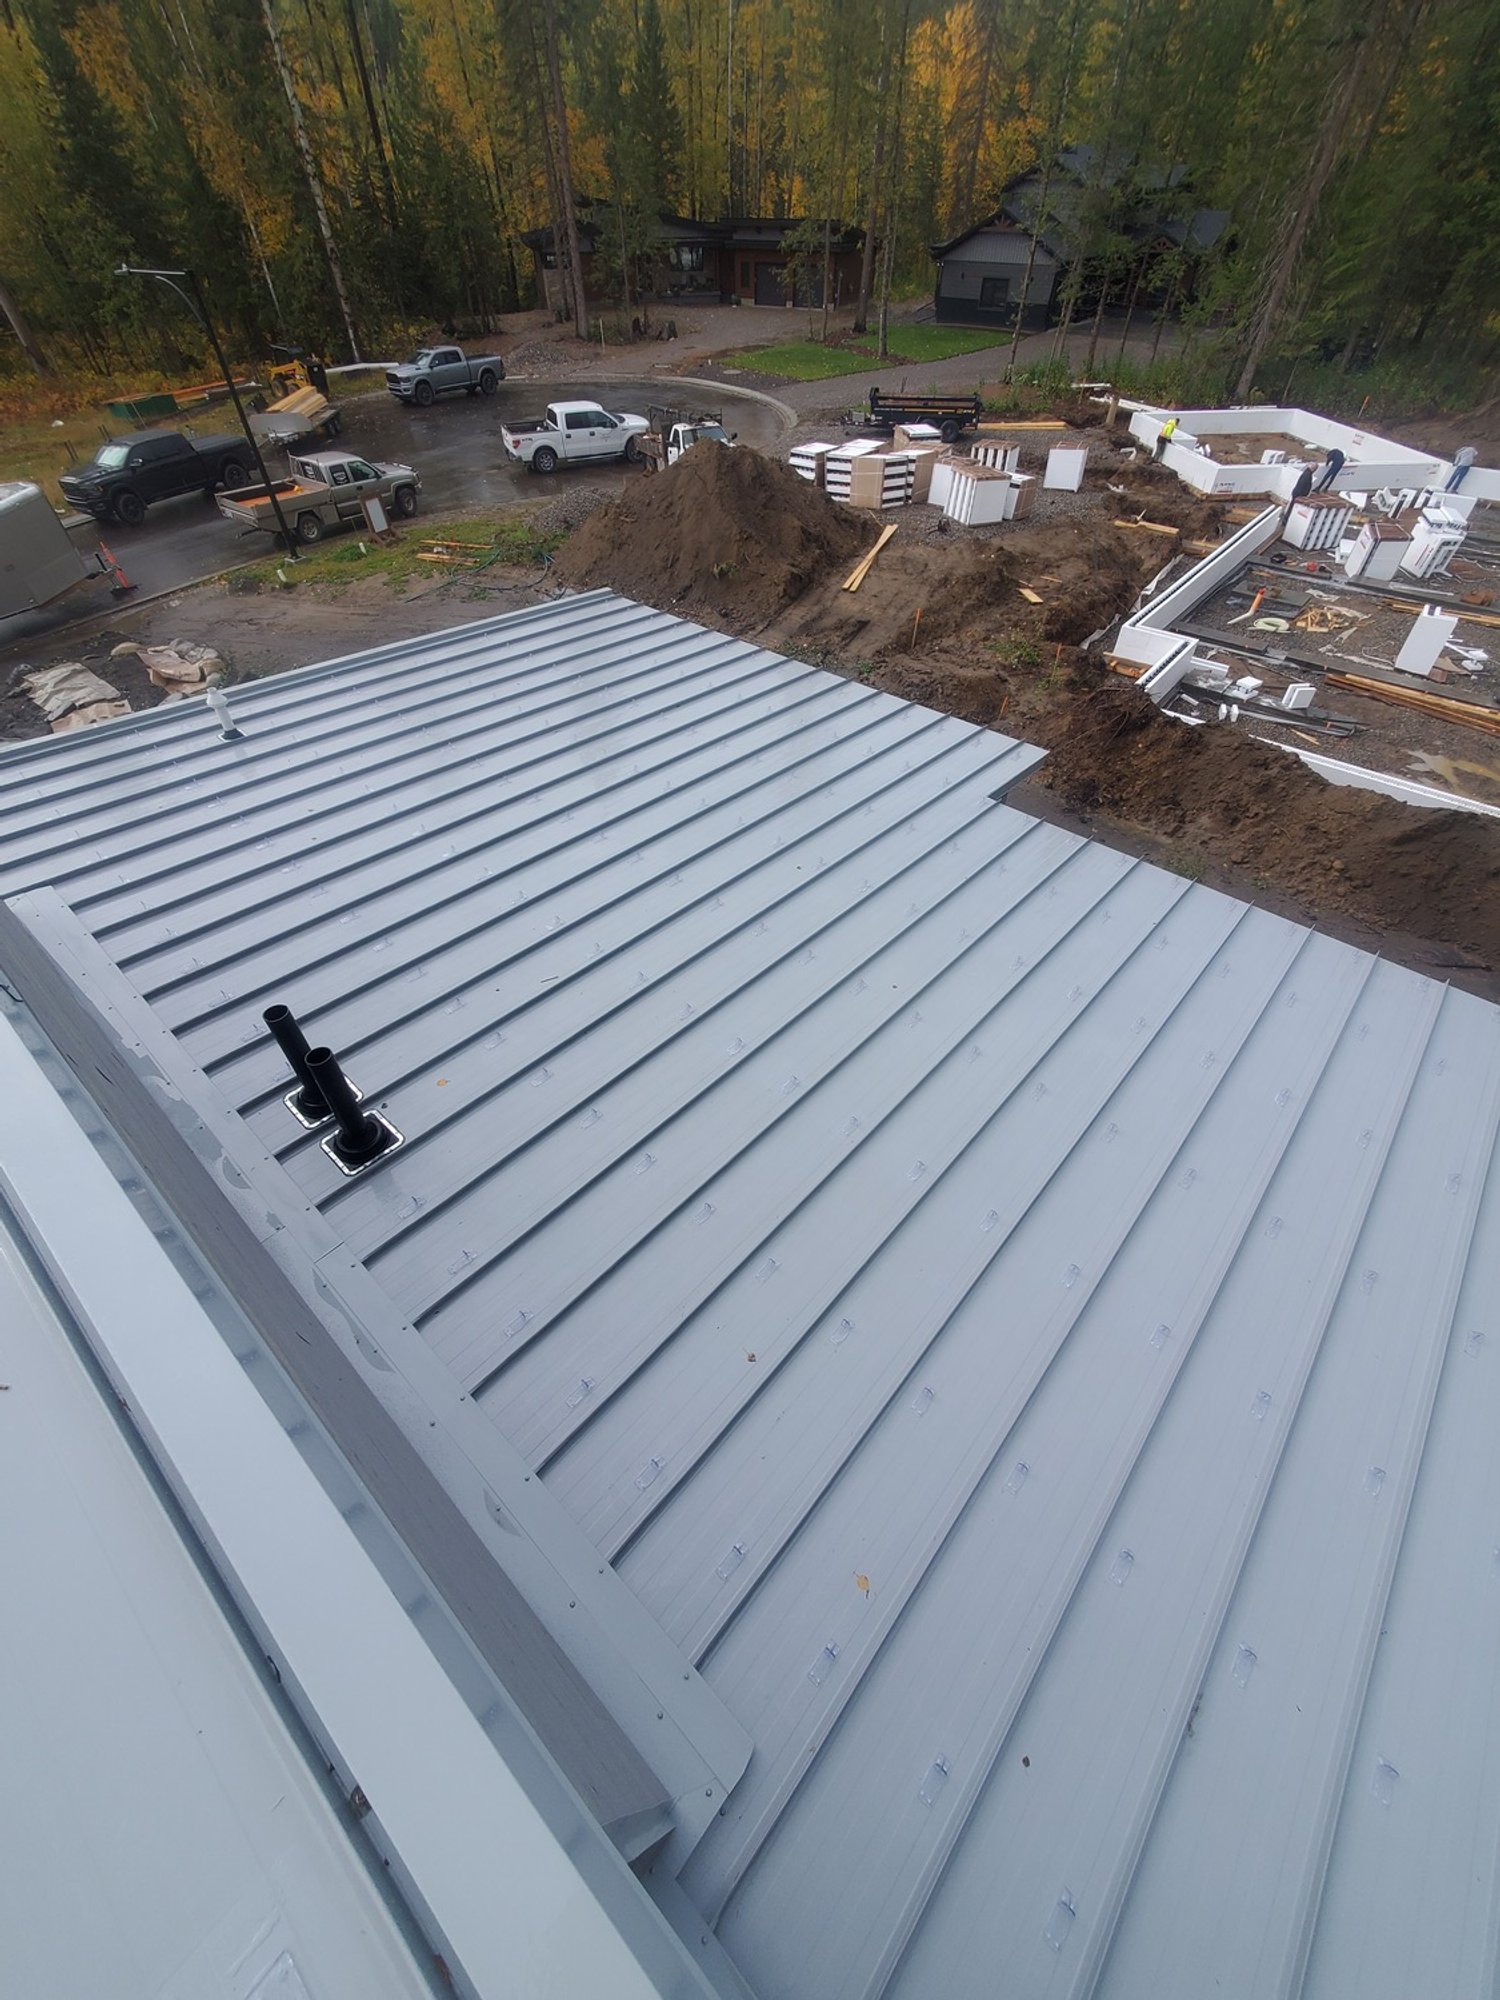 Birdhouse Roofing - Metal Roof Mechanically Locked Panel